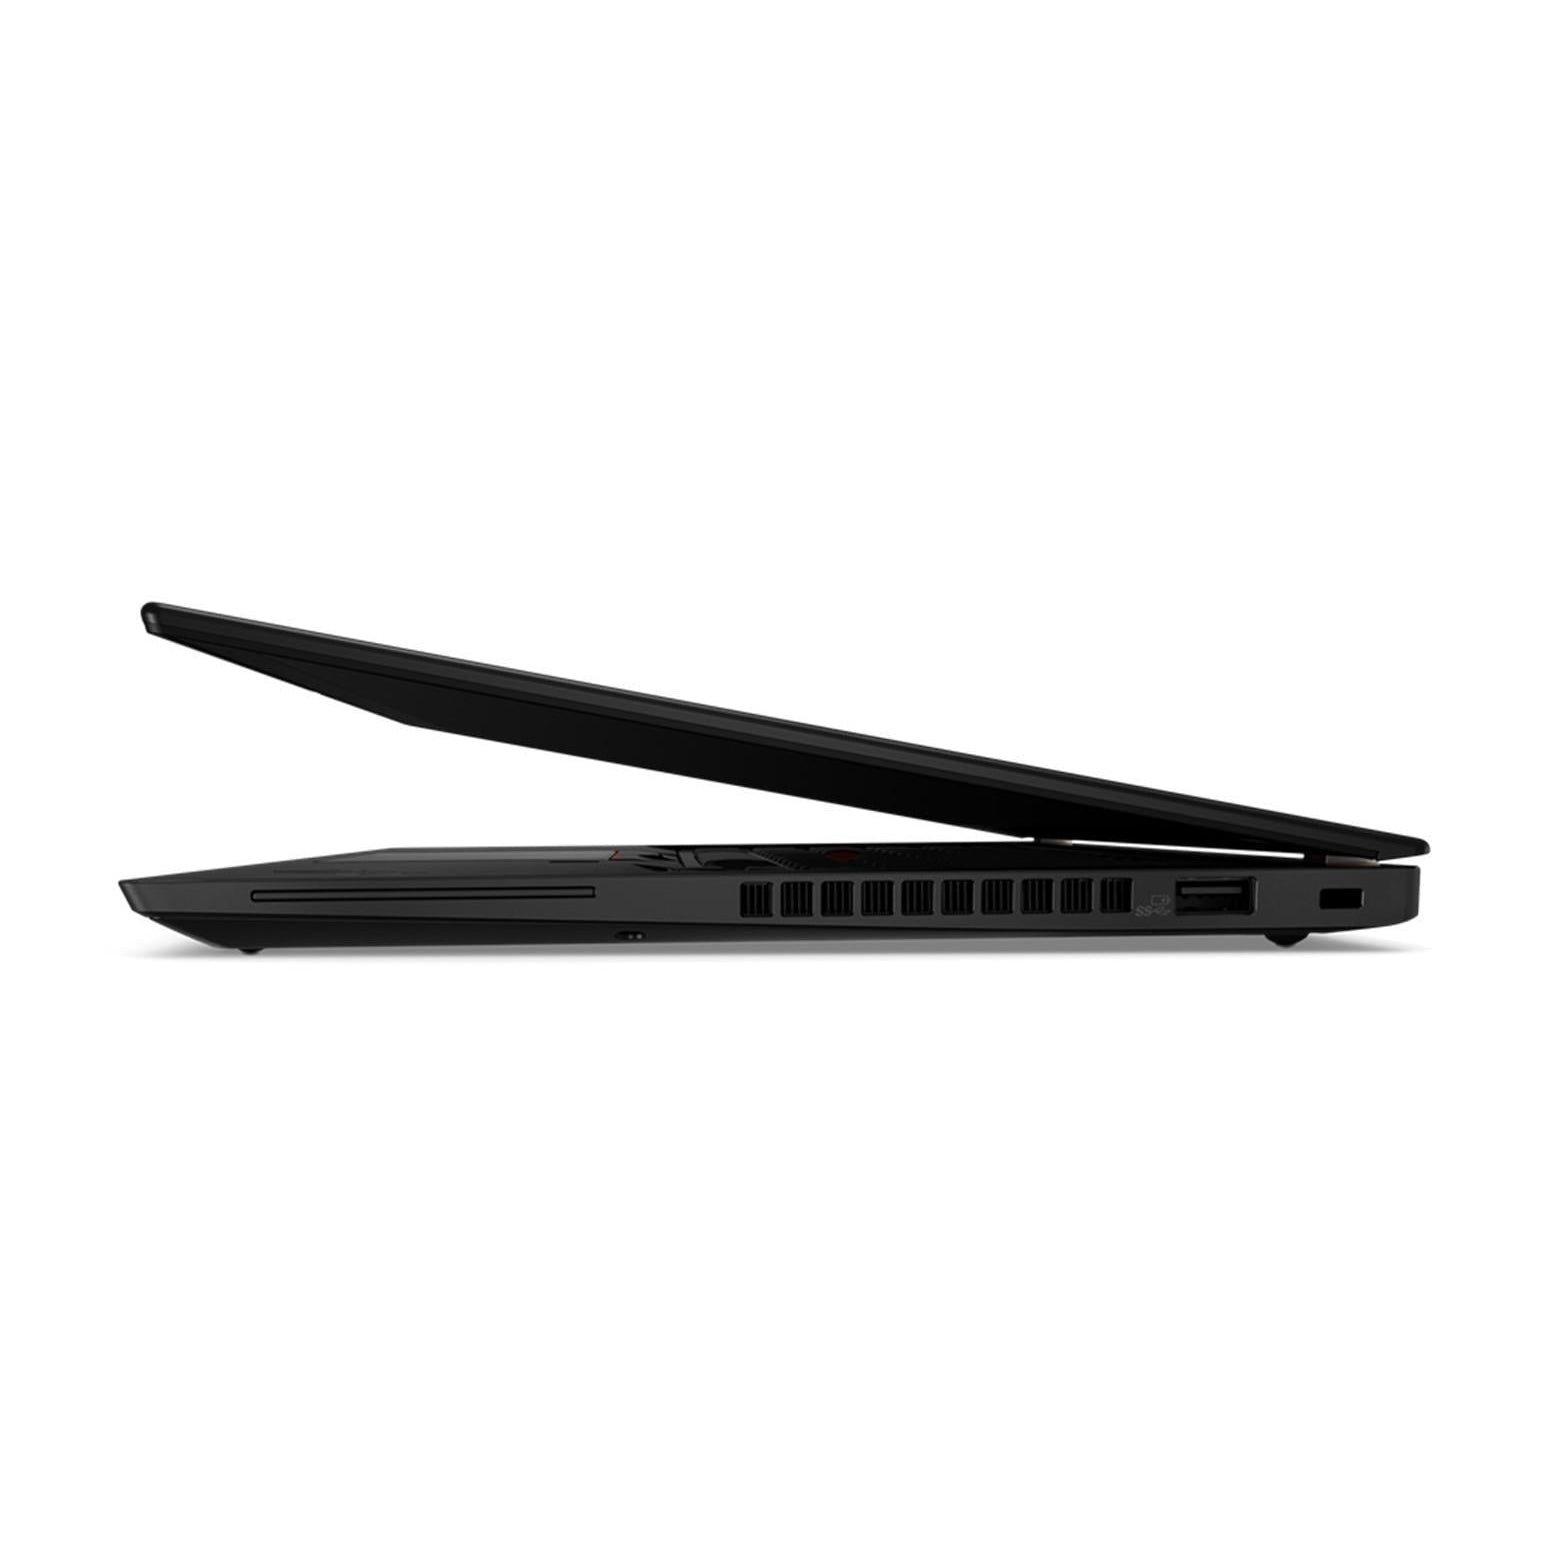 Lenovo ThinkPad 13 2nd Gen Intel Core i5 7th Generation 8GB RAM 128GB SSD 13.3" - Black - Refurbished Good